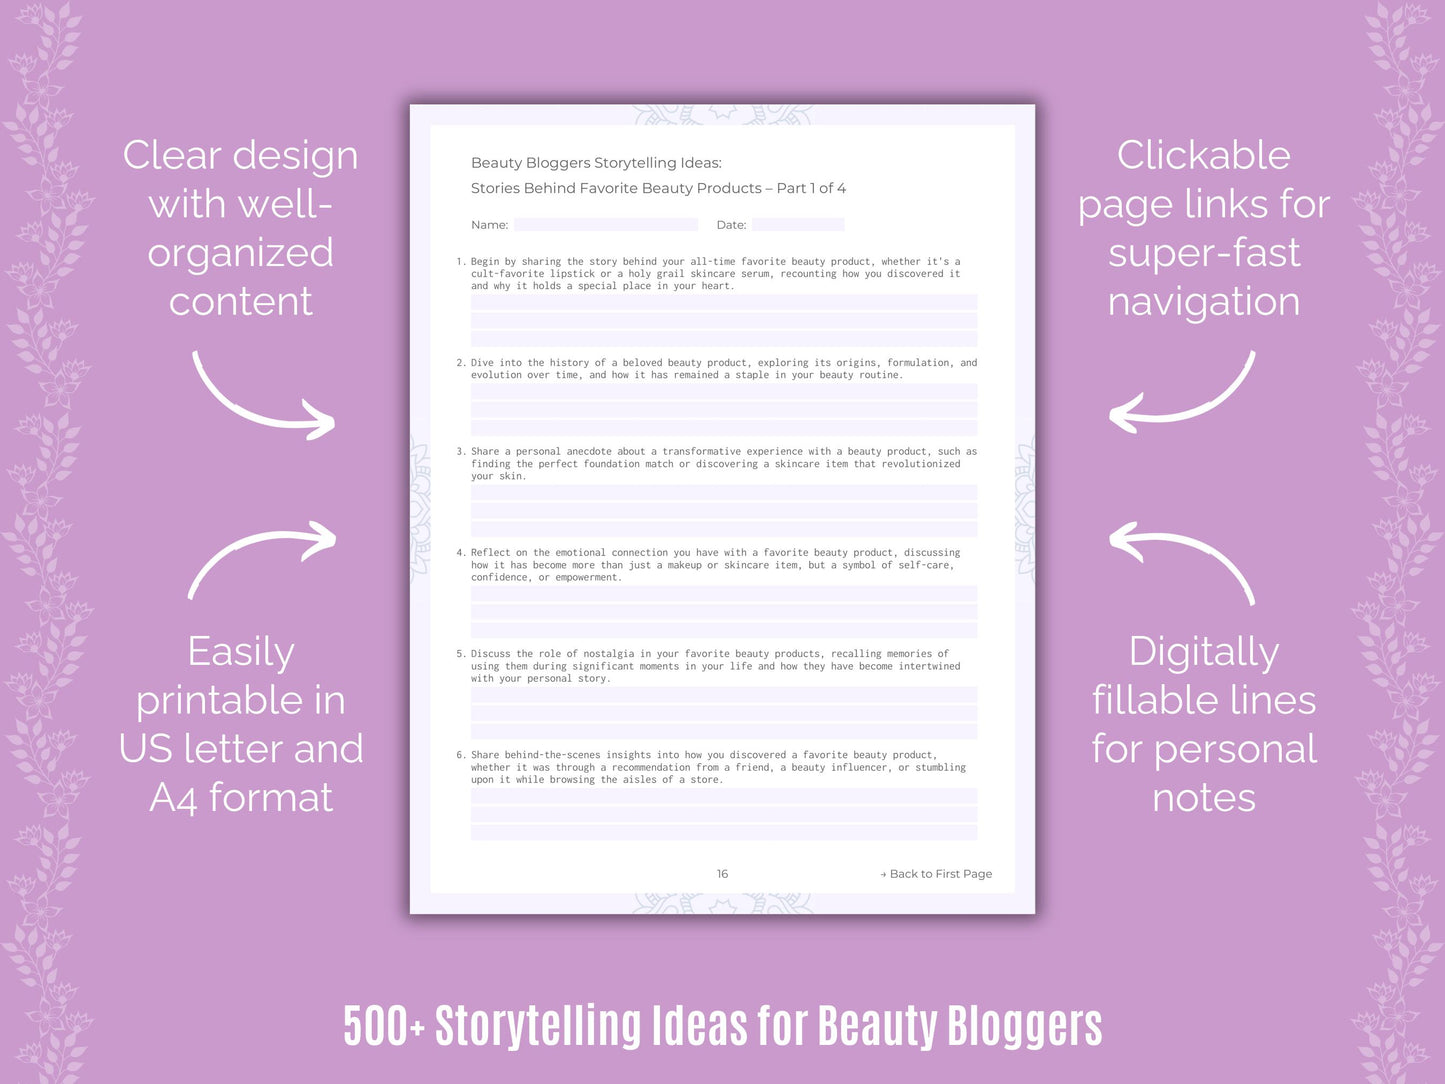 Beauty Bloggers Storytelling Ideas Resource